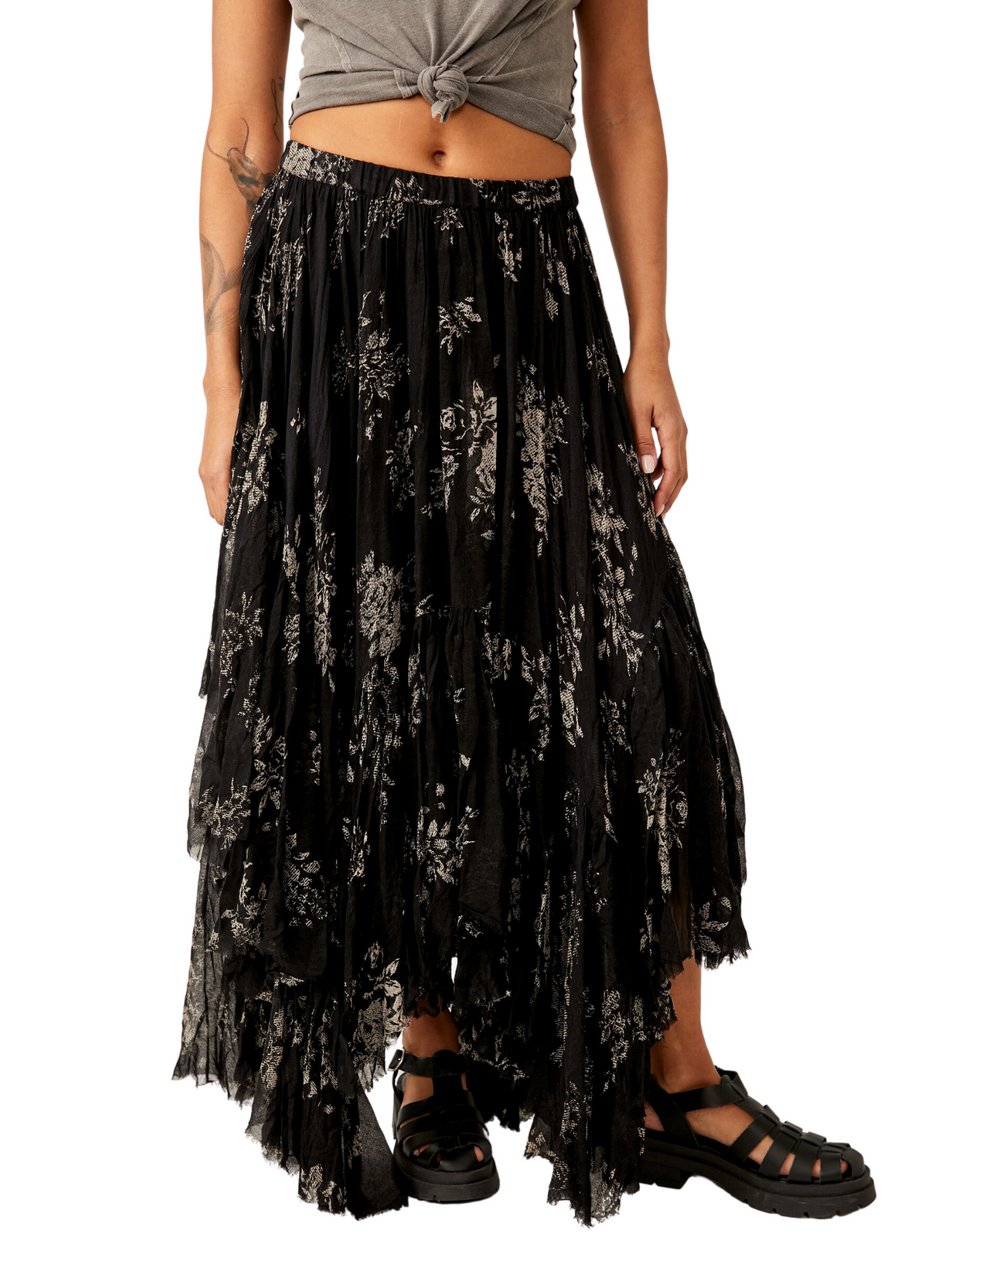 Printed Clover Skirt - Madison&